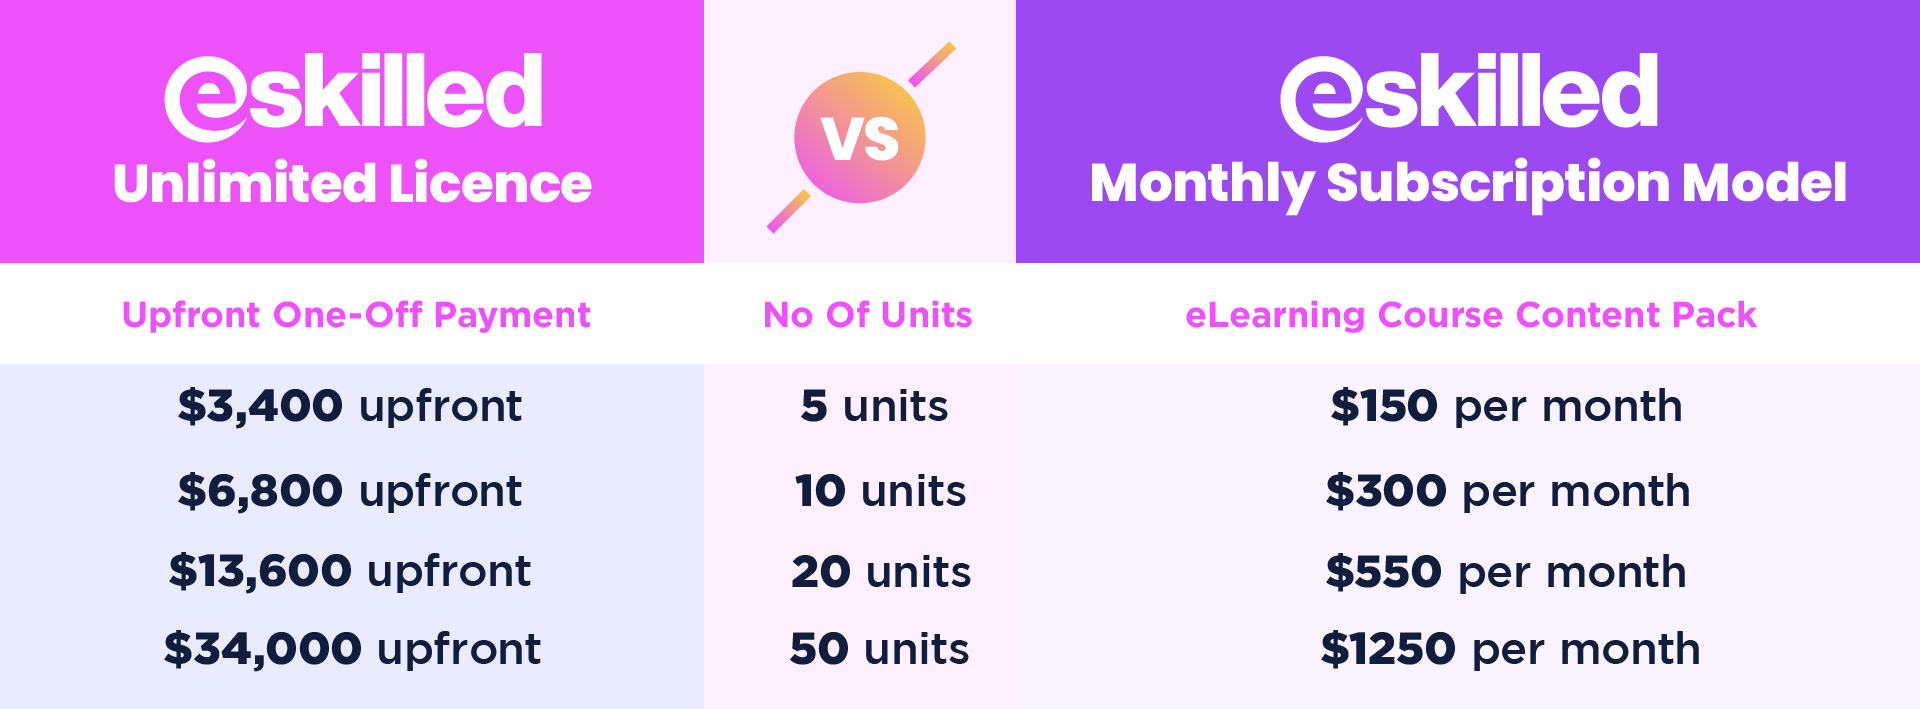 esk unlimited license vs monthly subscription model matrix